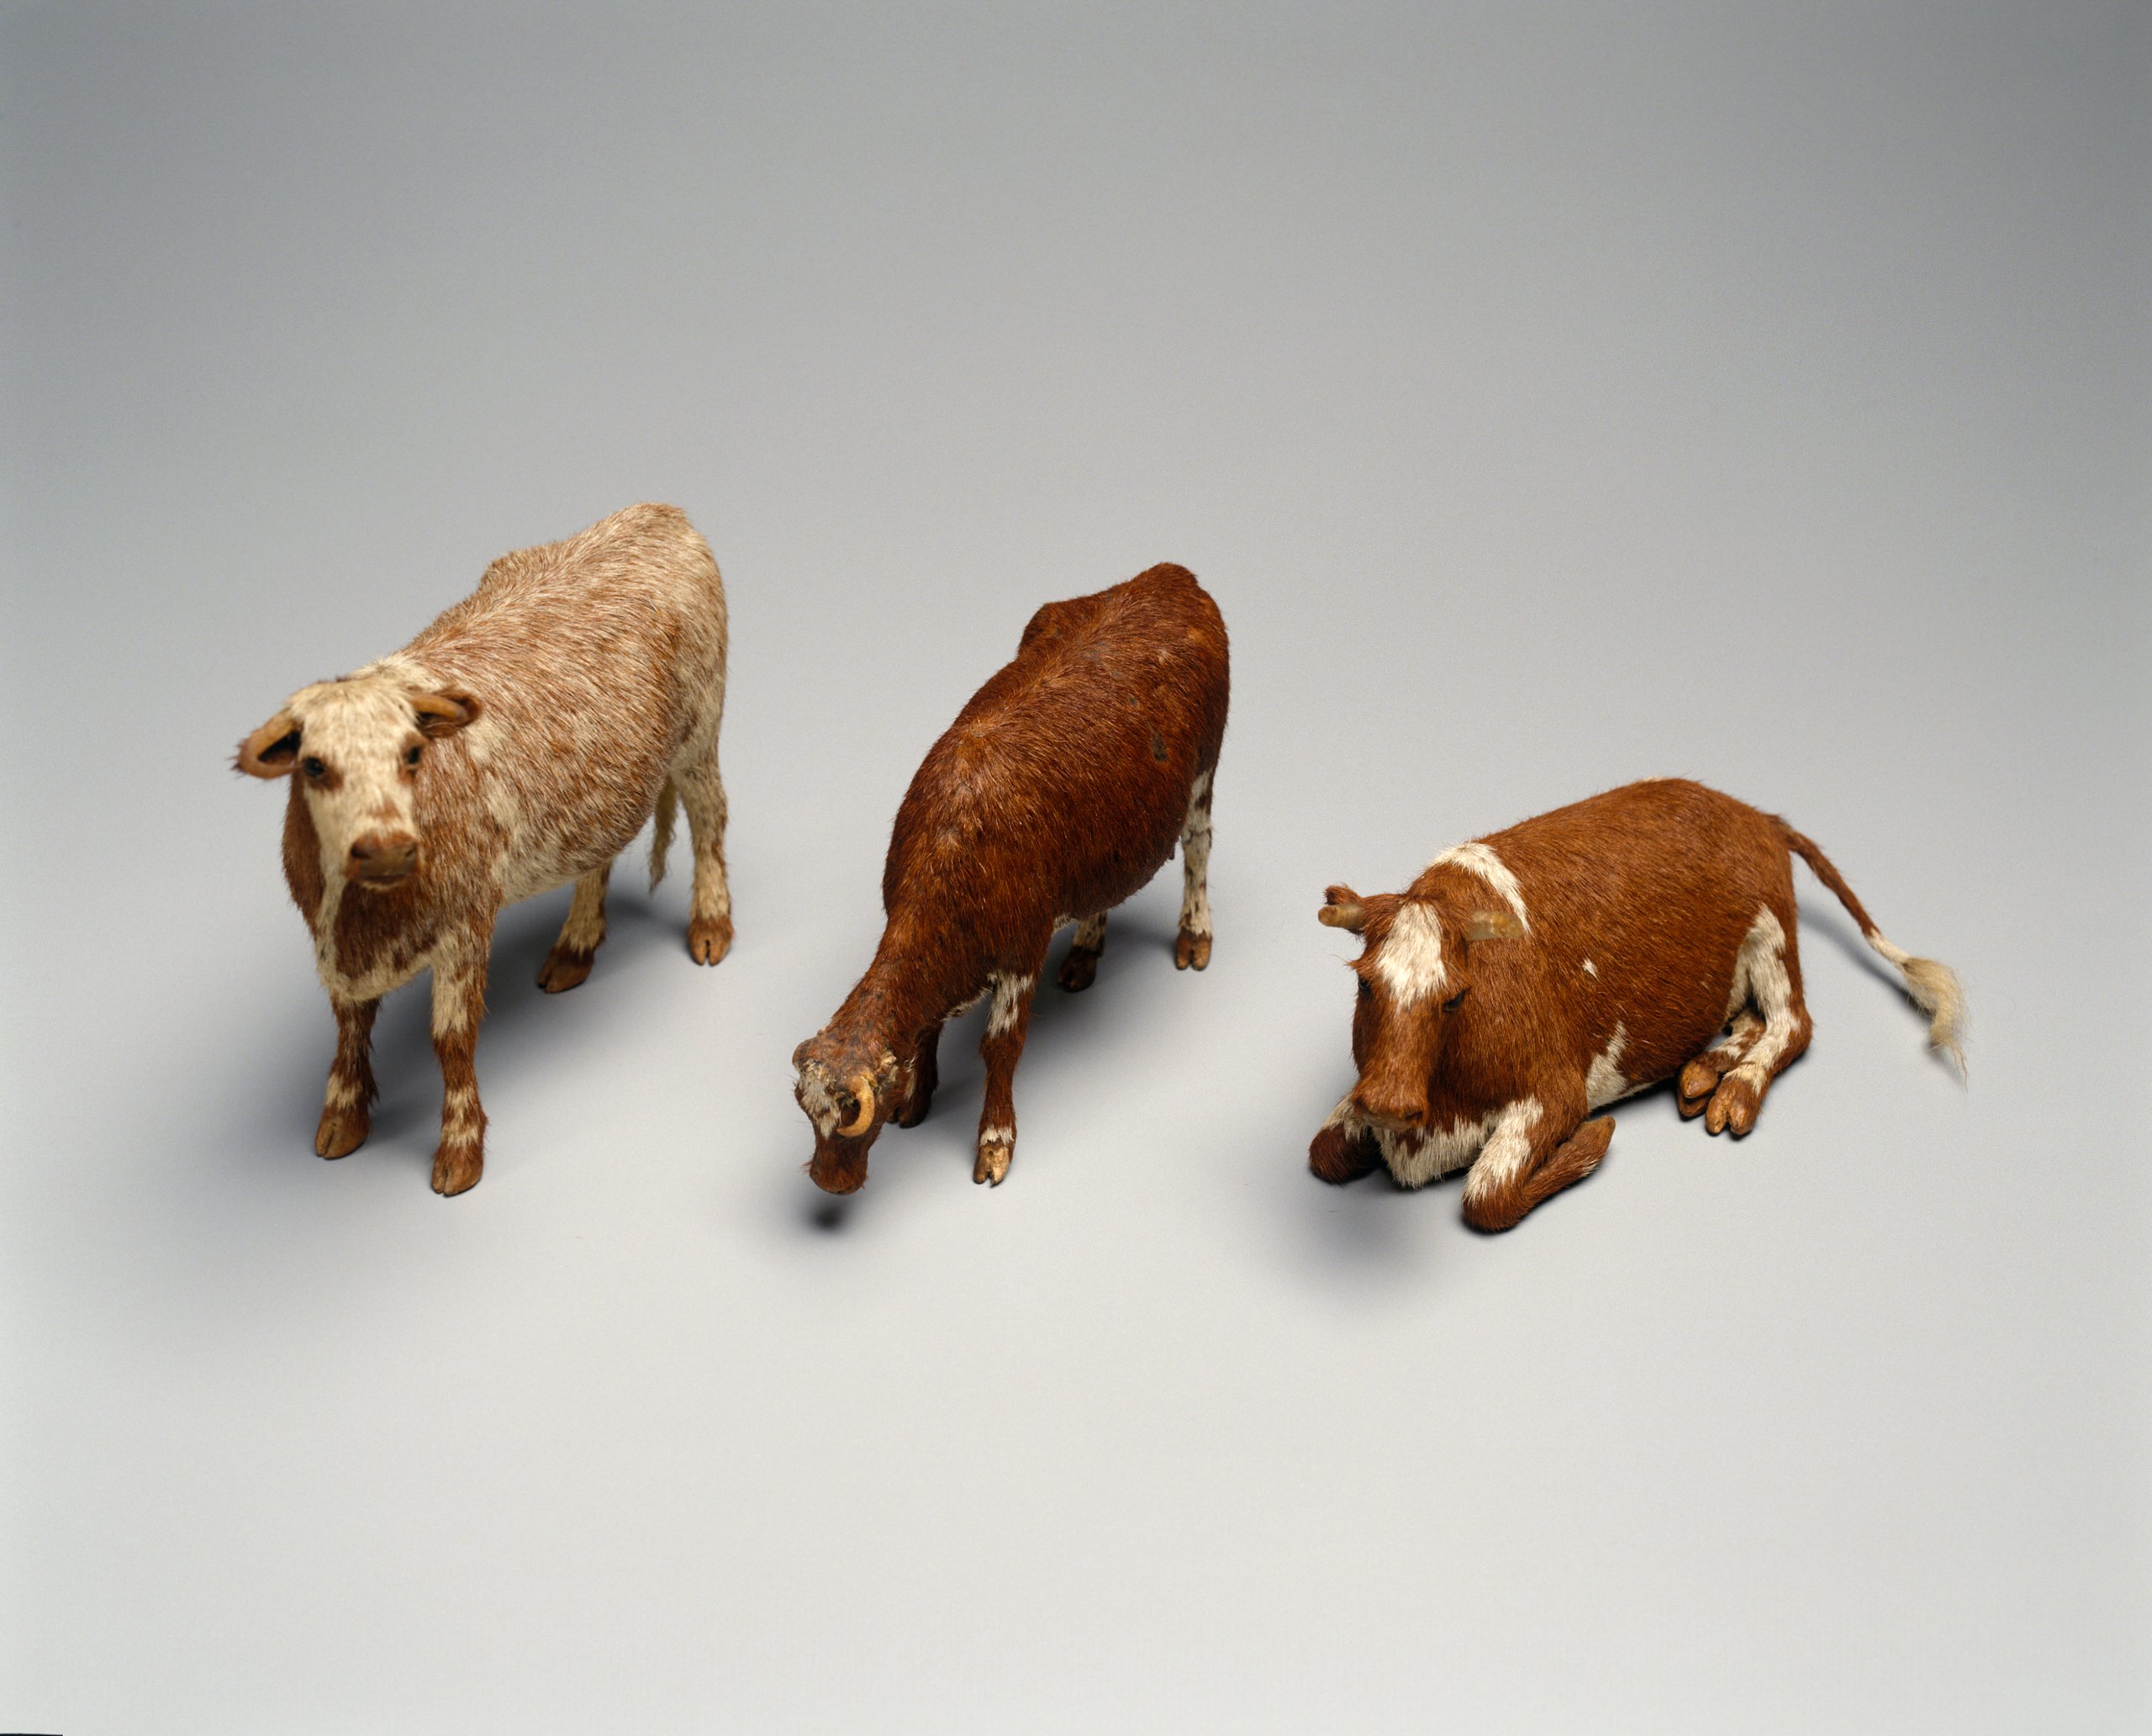 Miniature papier-mache cows by Wilhelmina Jurd